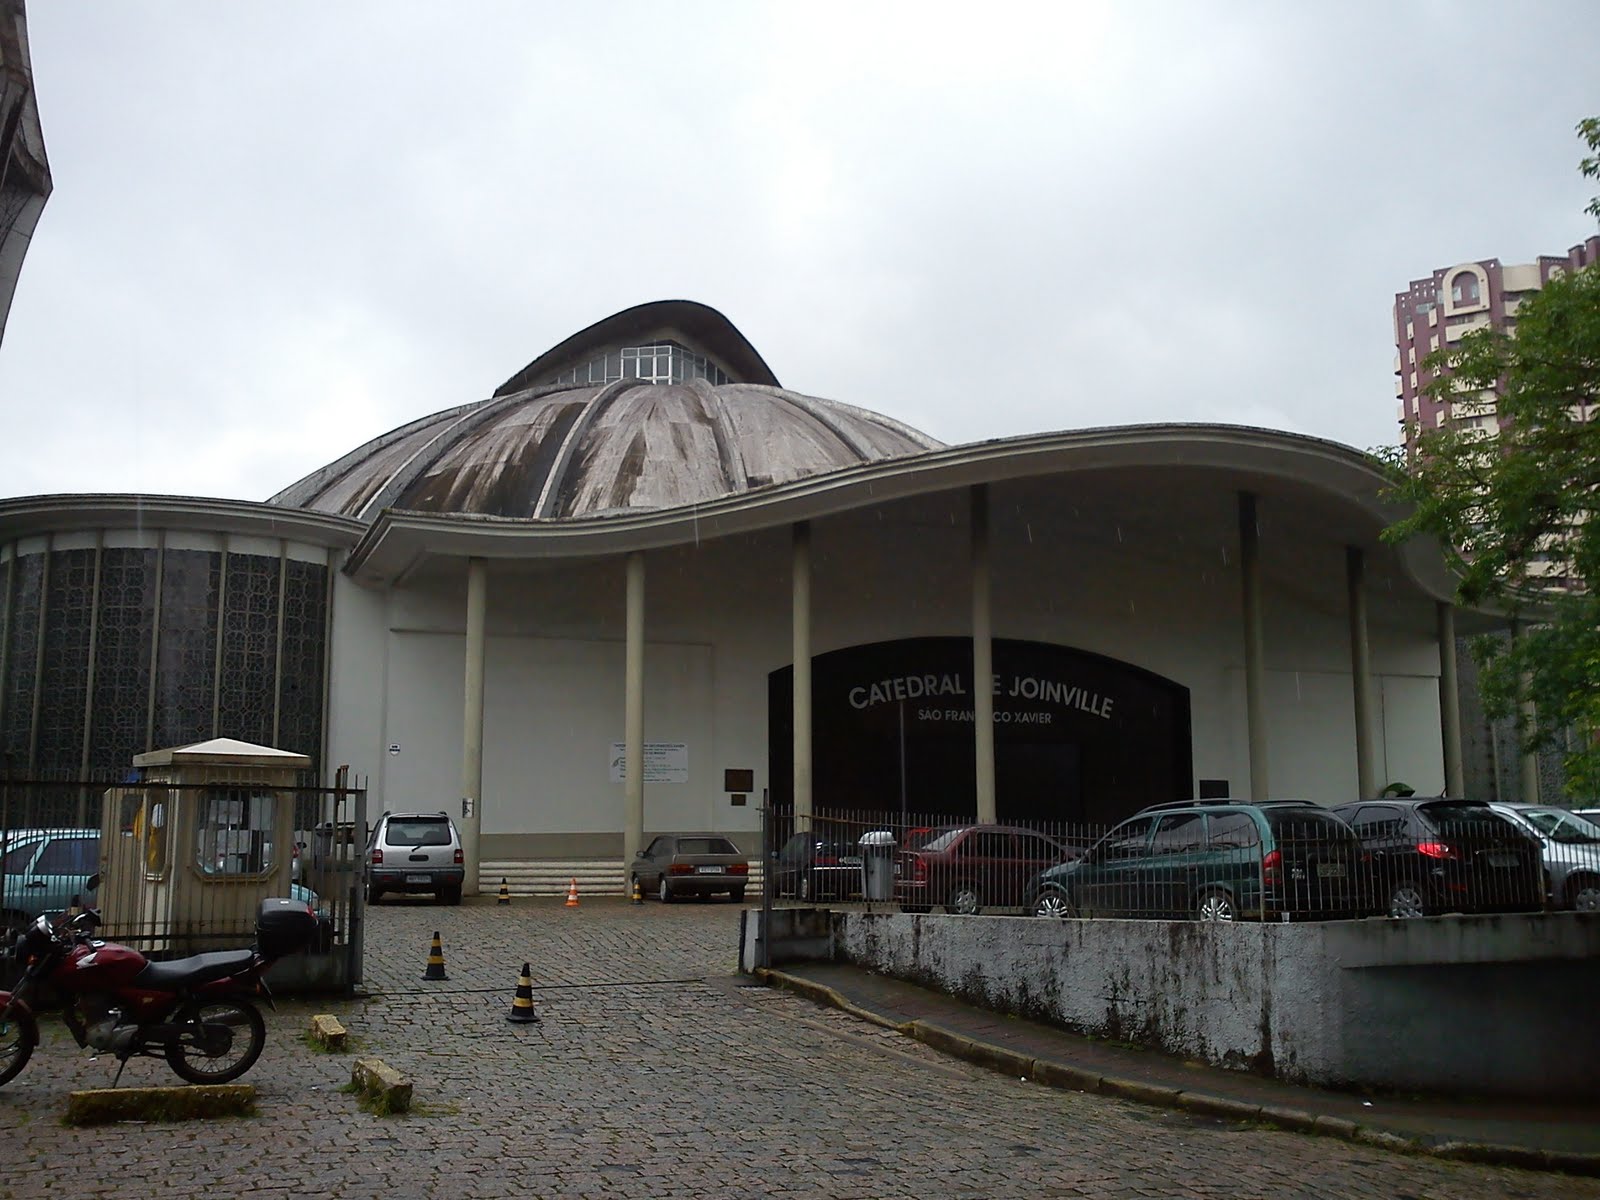 Catedral Diocesana de Joinville (Catedral São Francisco Xavier)